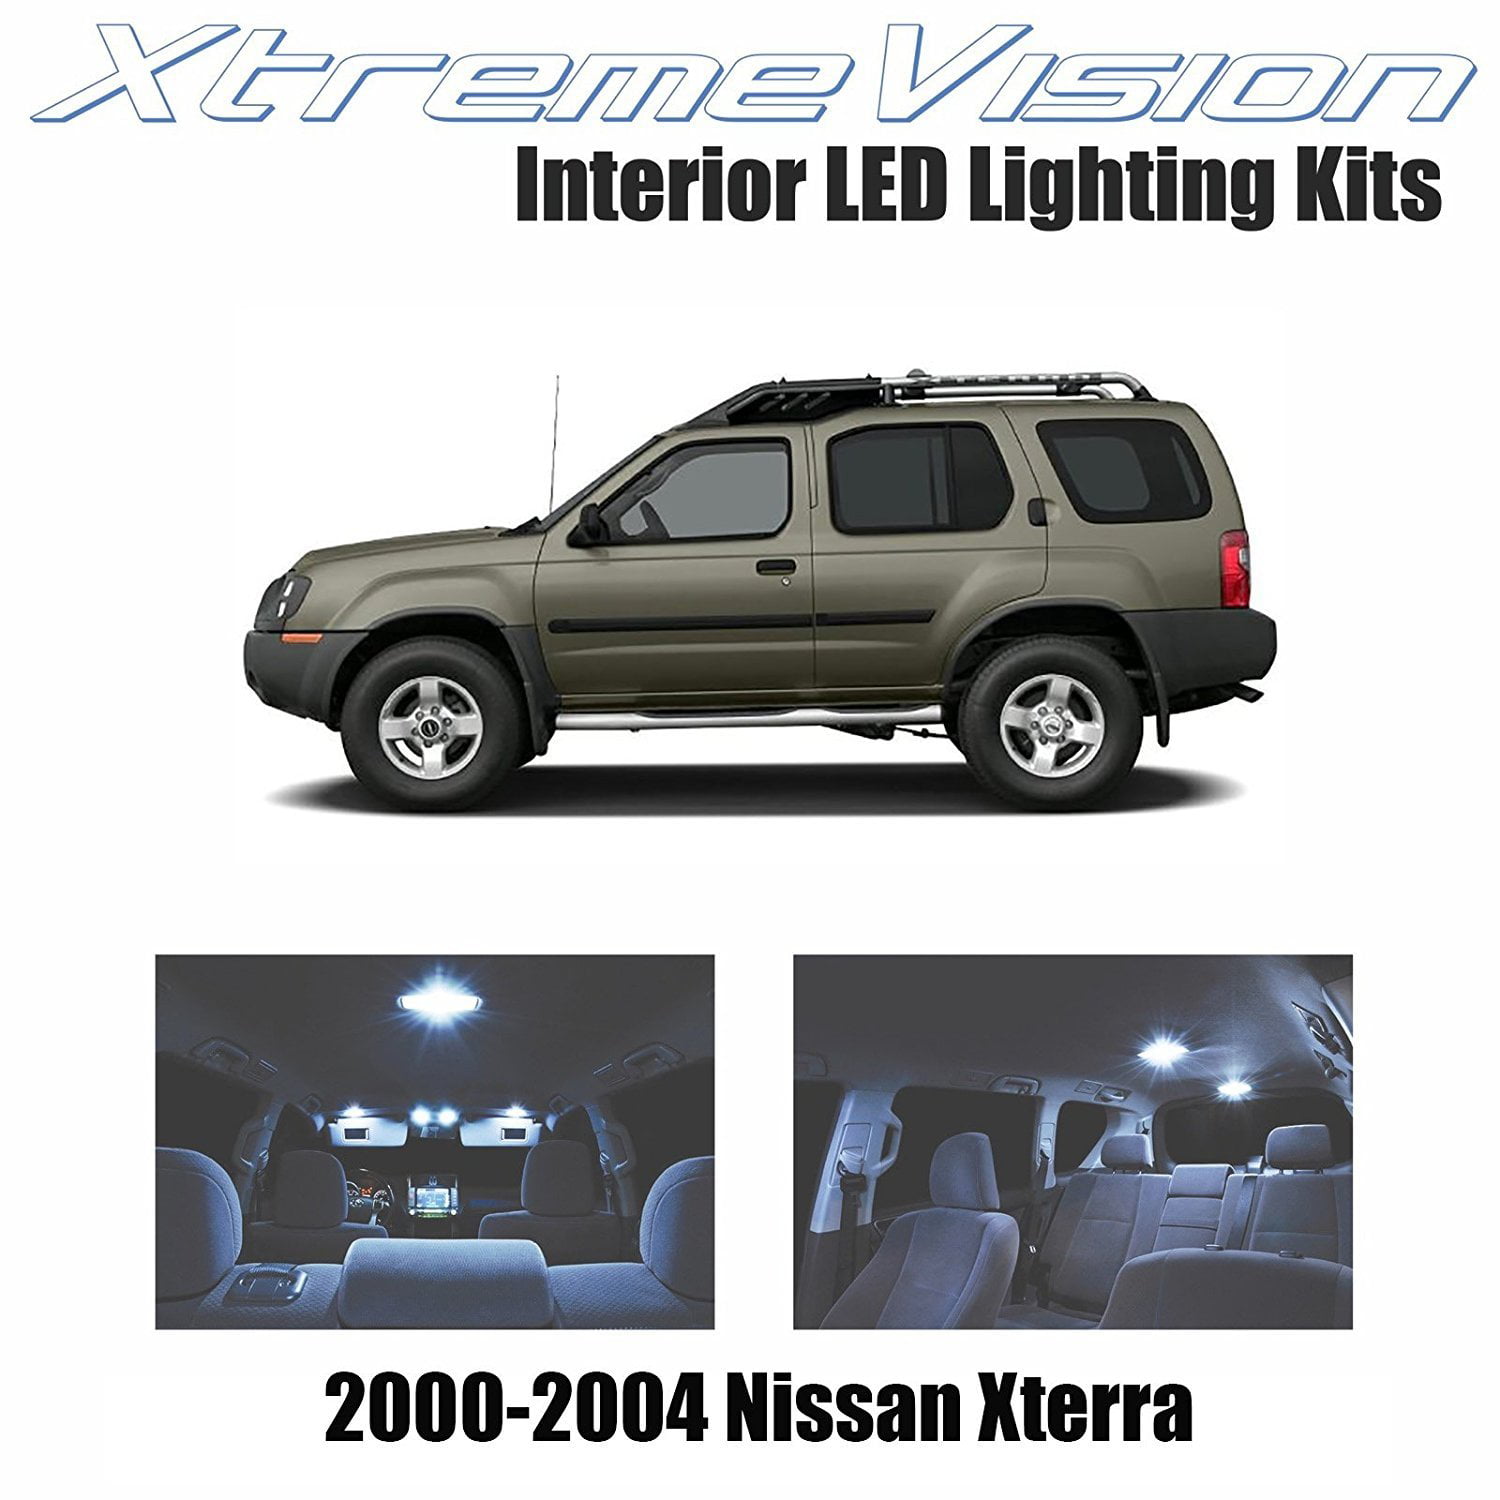 10X 6SMD White 3528 LED Interior License Plate Lights For 2000-04 Nissan Xterra